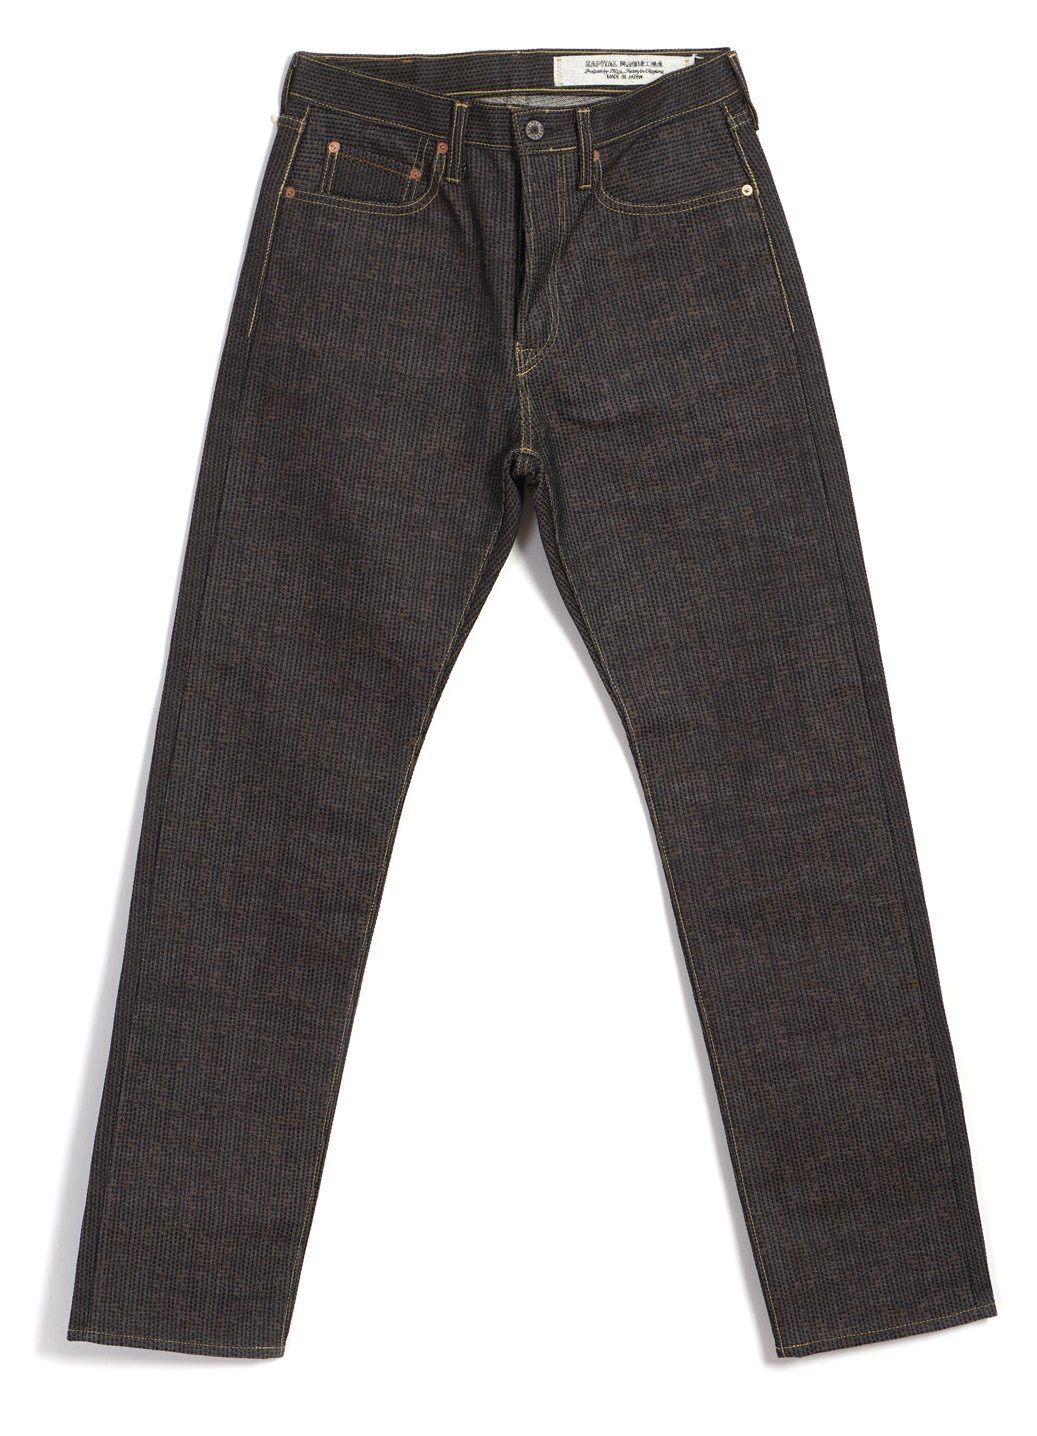 KAPITAL - CENTURY DENIM MONKEY CISCO | Sashiko 5P Jeans | N5S(Brown) - HANSEN Garments